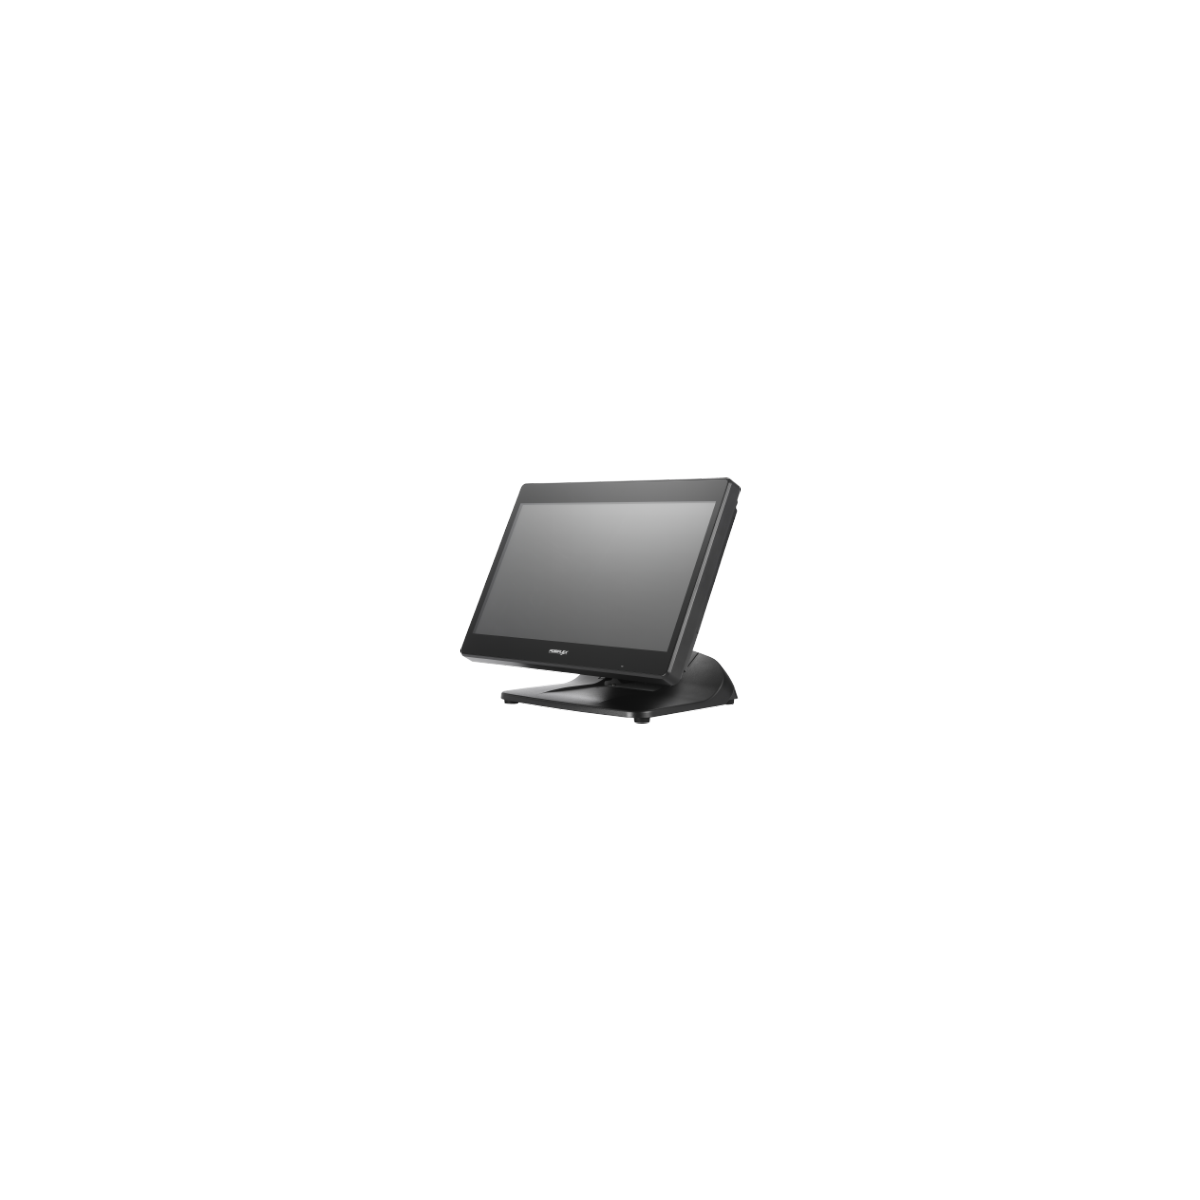 Posiflex PS3616GNS128W14 Todo en Uno 2 GHz J6412 396 cm 156 1366 x 768 Pixeles Pantalla tactil Negro